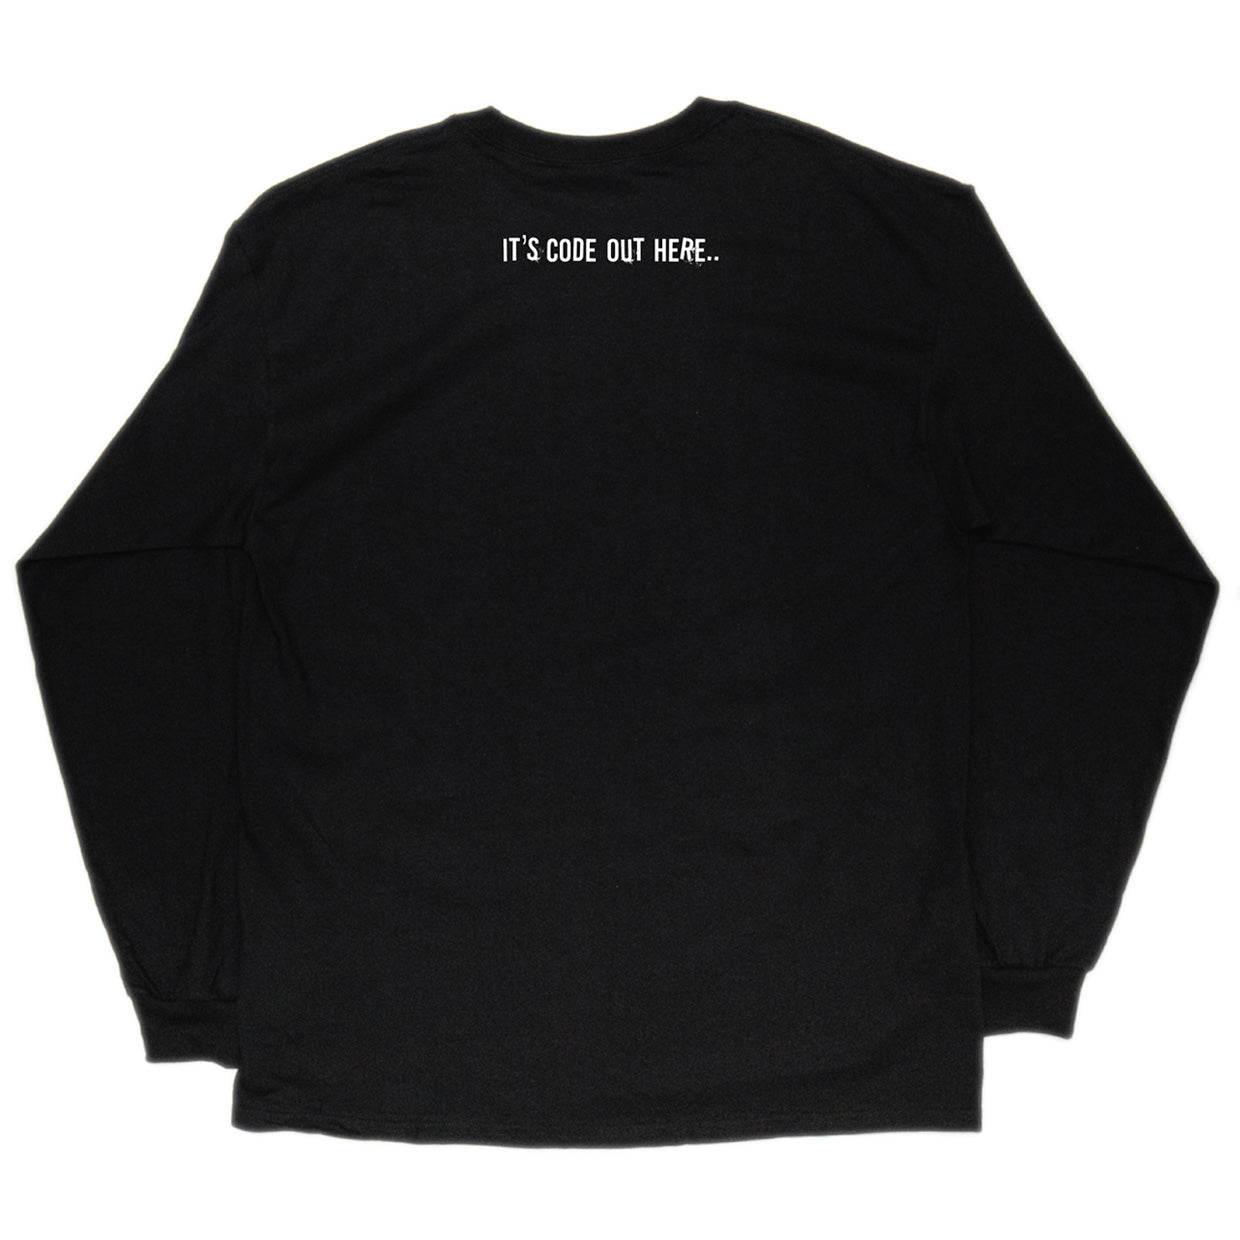 0115 Records - T-Shirts - 0115 x Katana Long Sleeve T-shirt (Black)